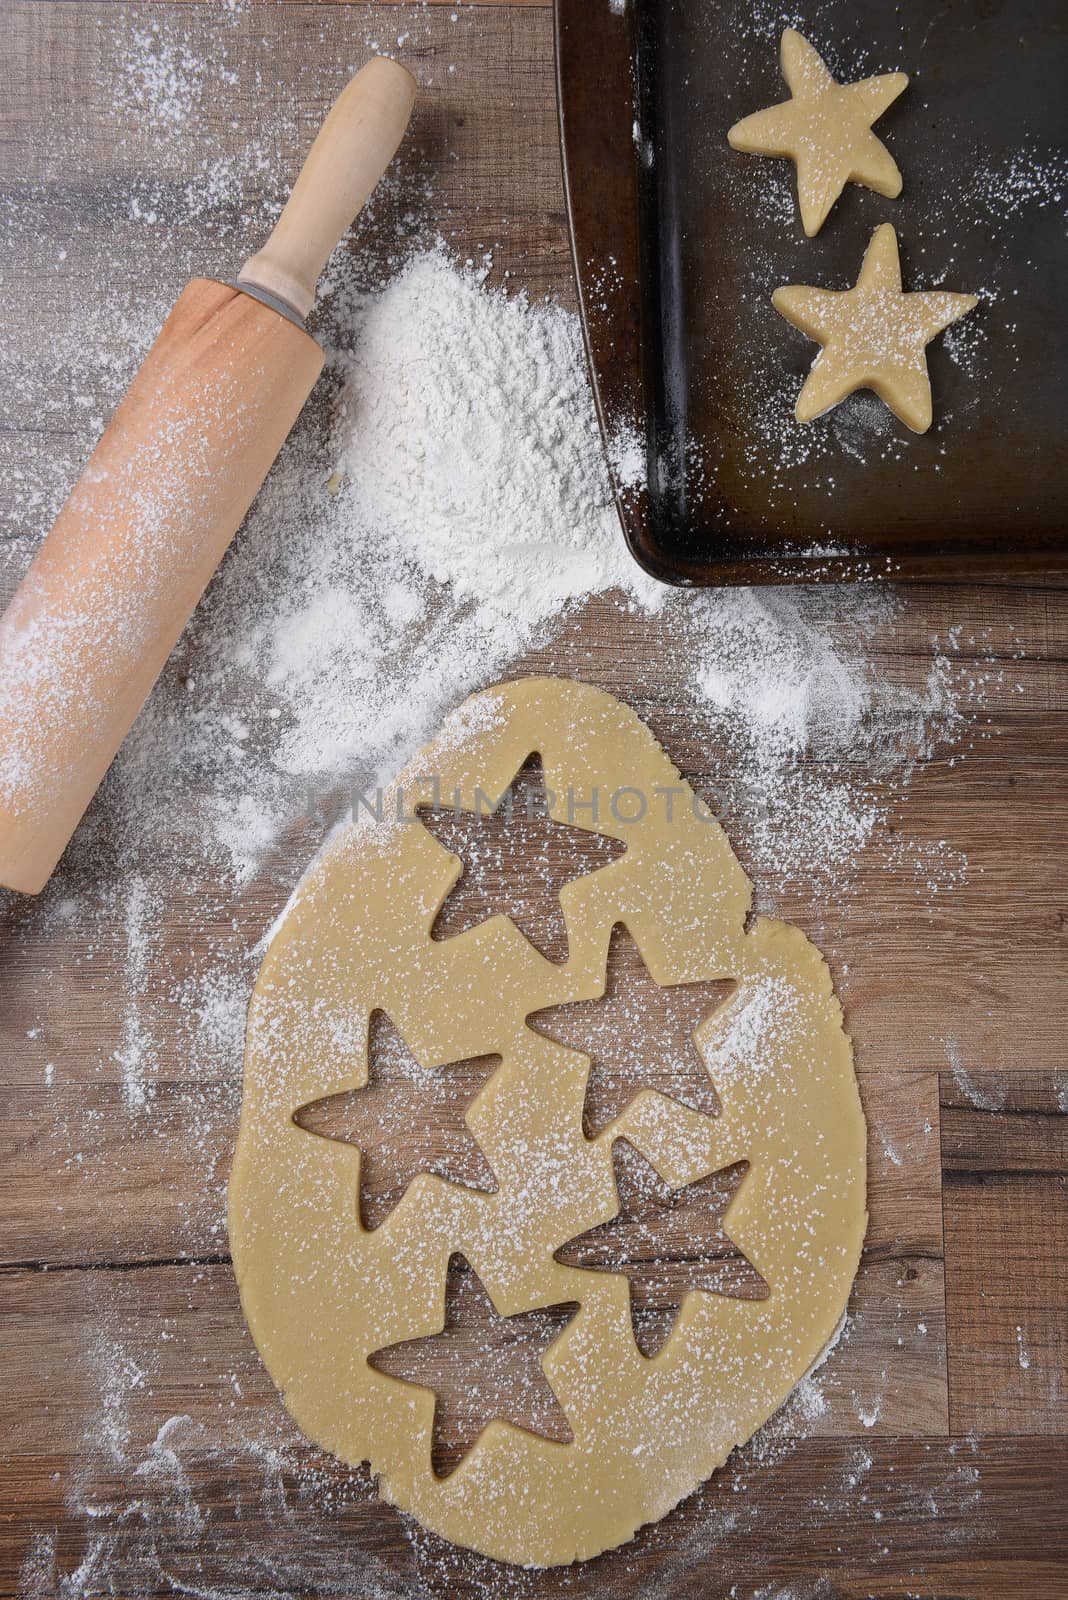 Making Christmas Shaped Sugar Cookies by sCukrov